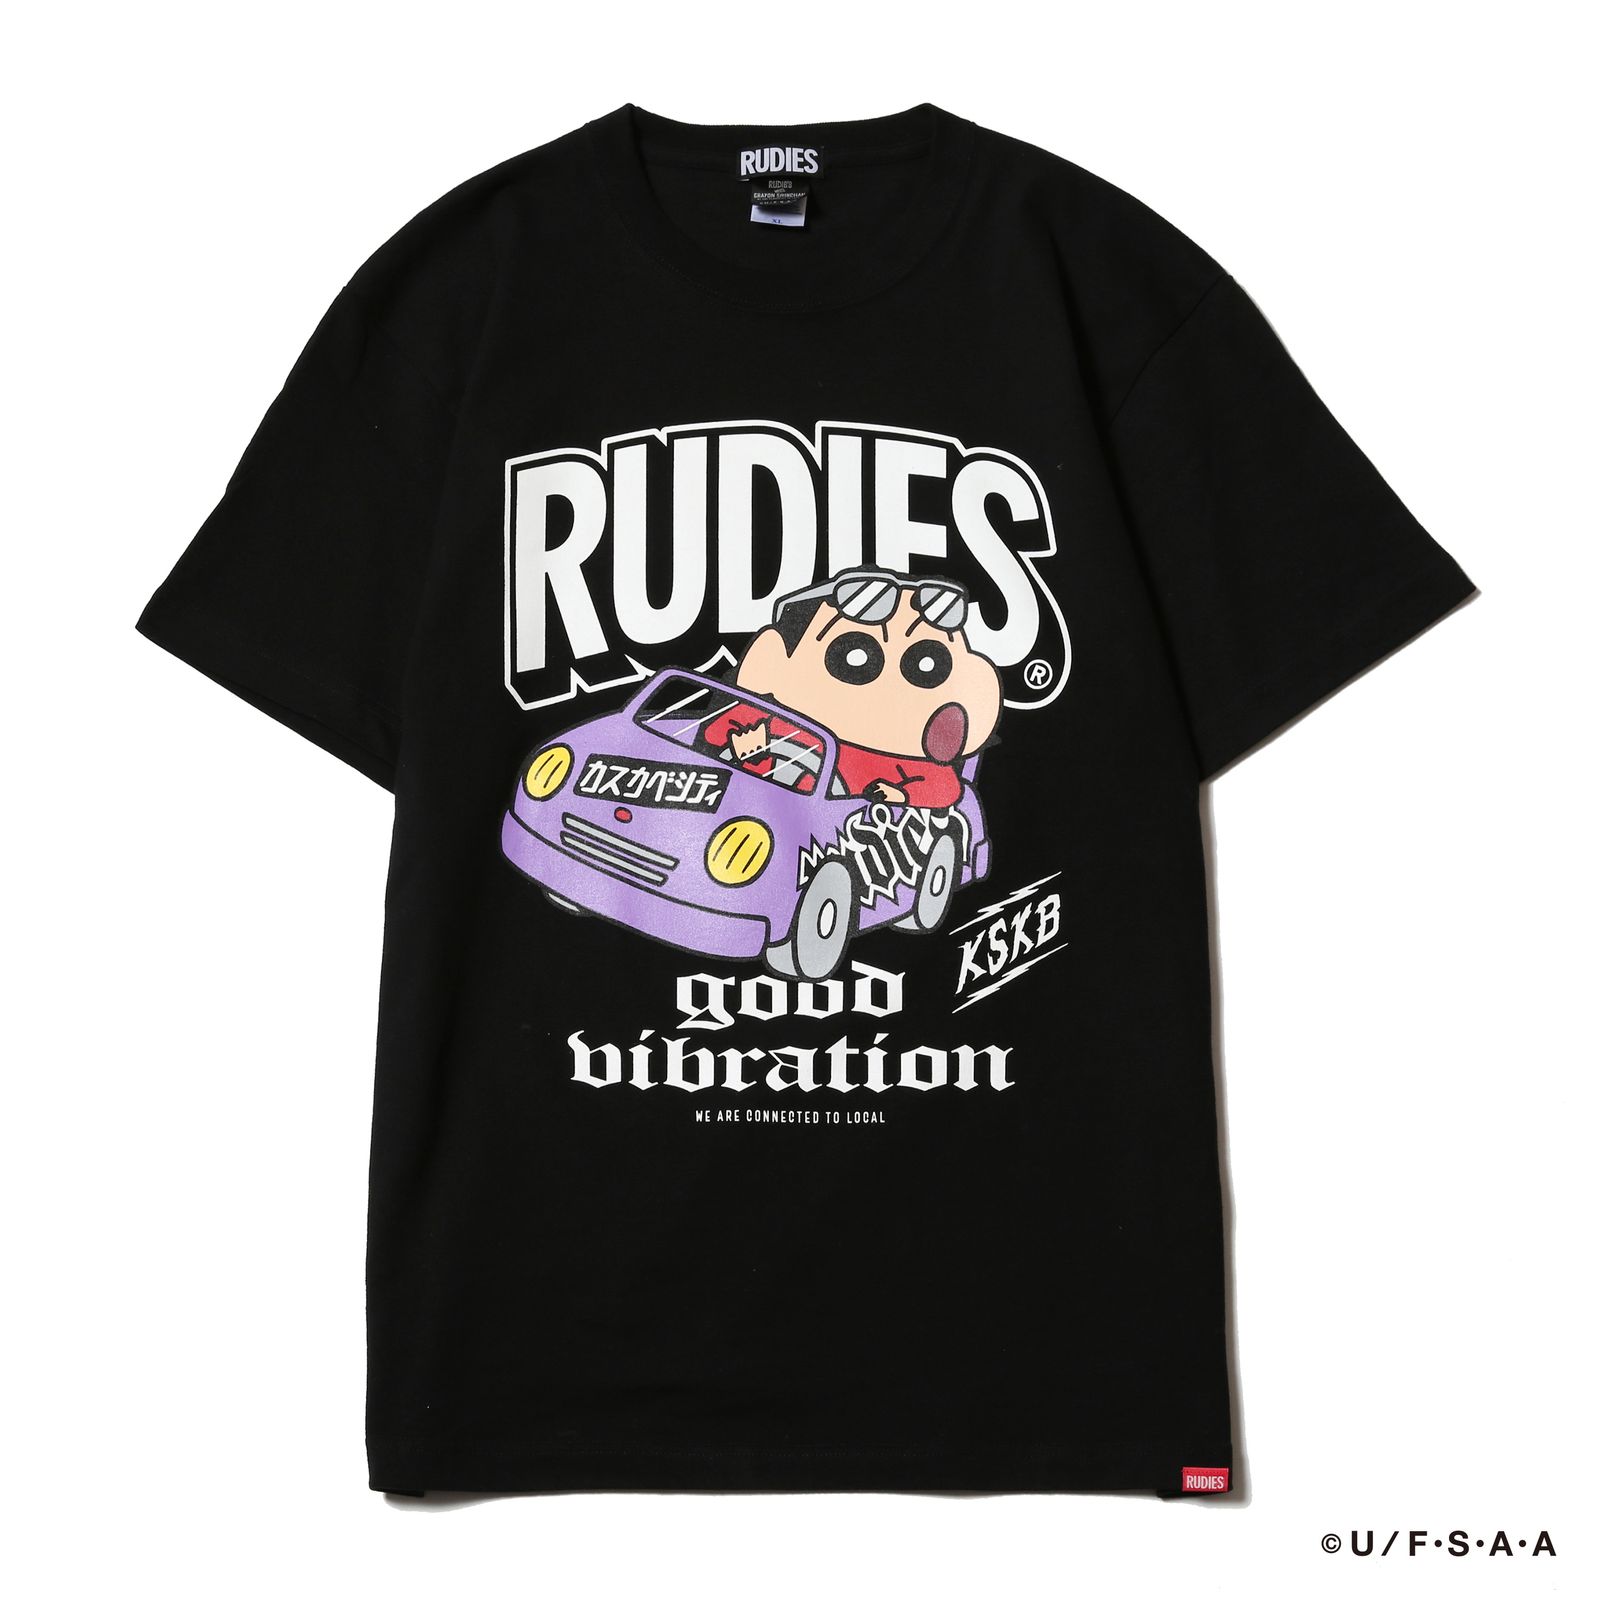 RUDIE'S ルーディーズ RUDIES 上下 セットアップ 10-FEET